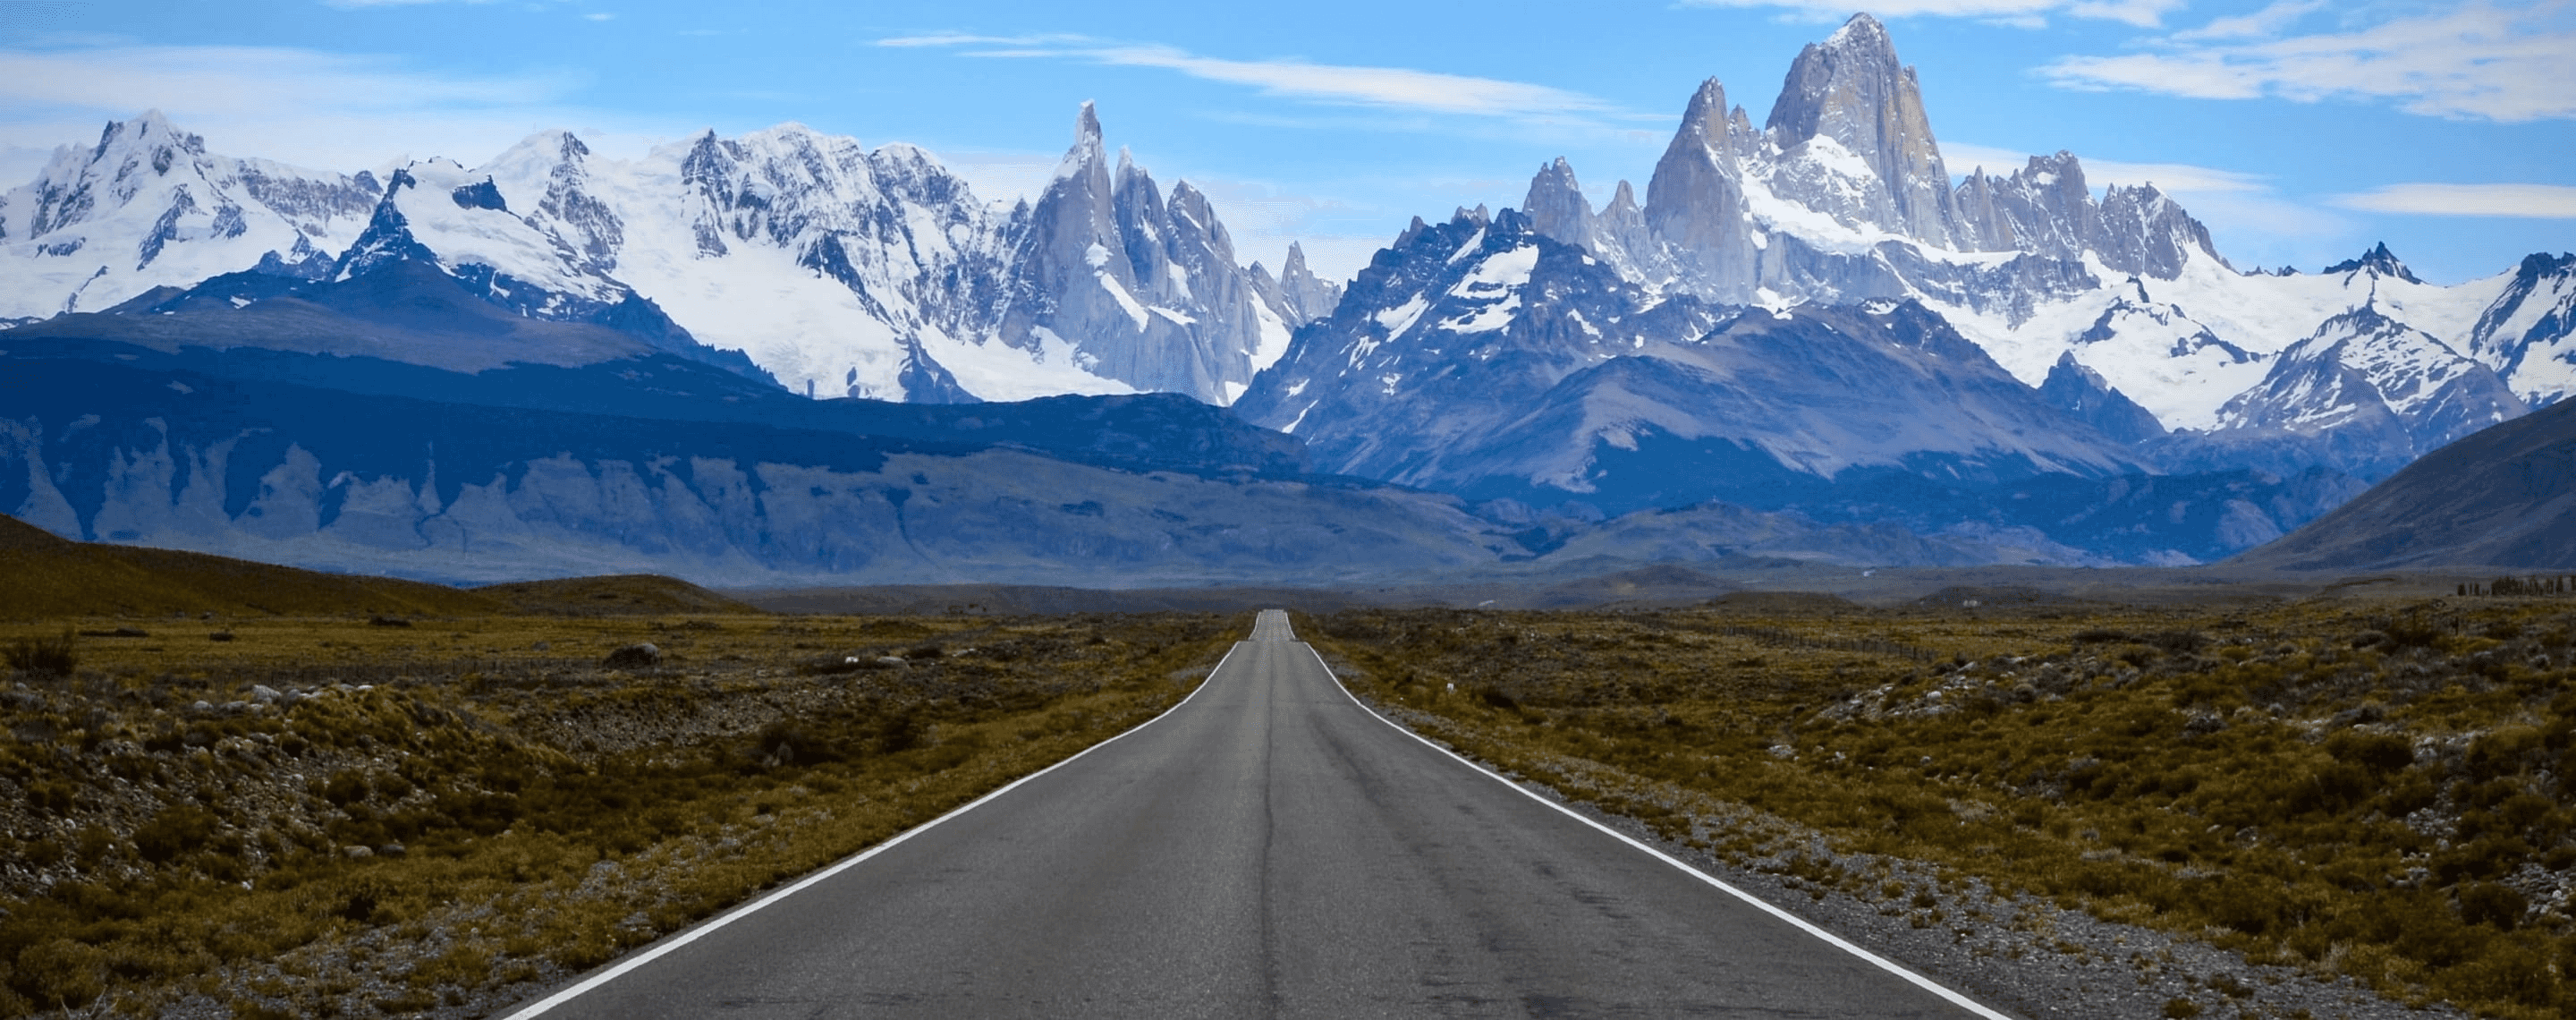 fitz roy mountain, Ruta Provincial 23 und Nationalpark Los Glaciares im argentinischen Teil Patagoniens, Provinz Santa Cruz